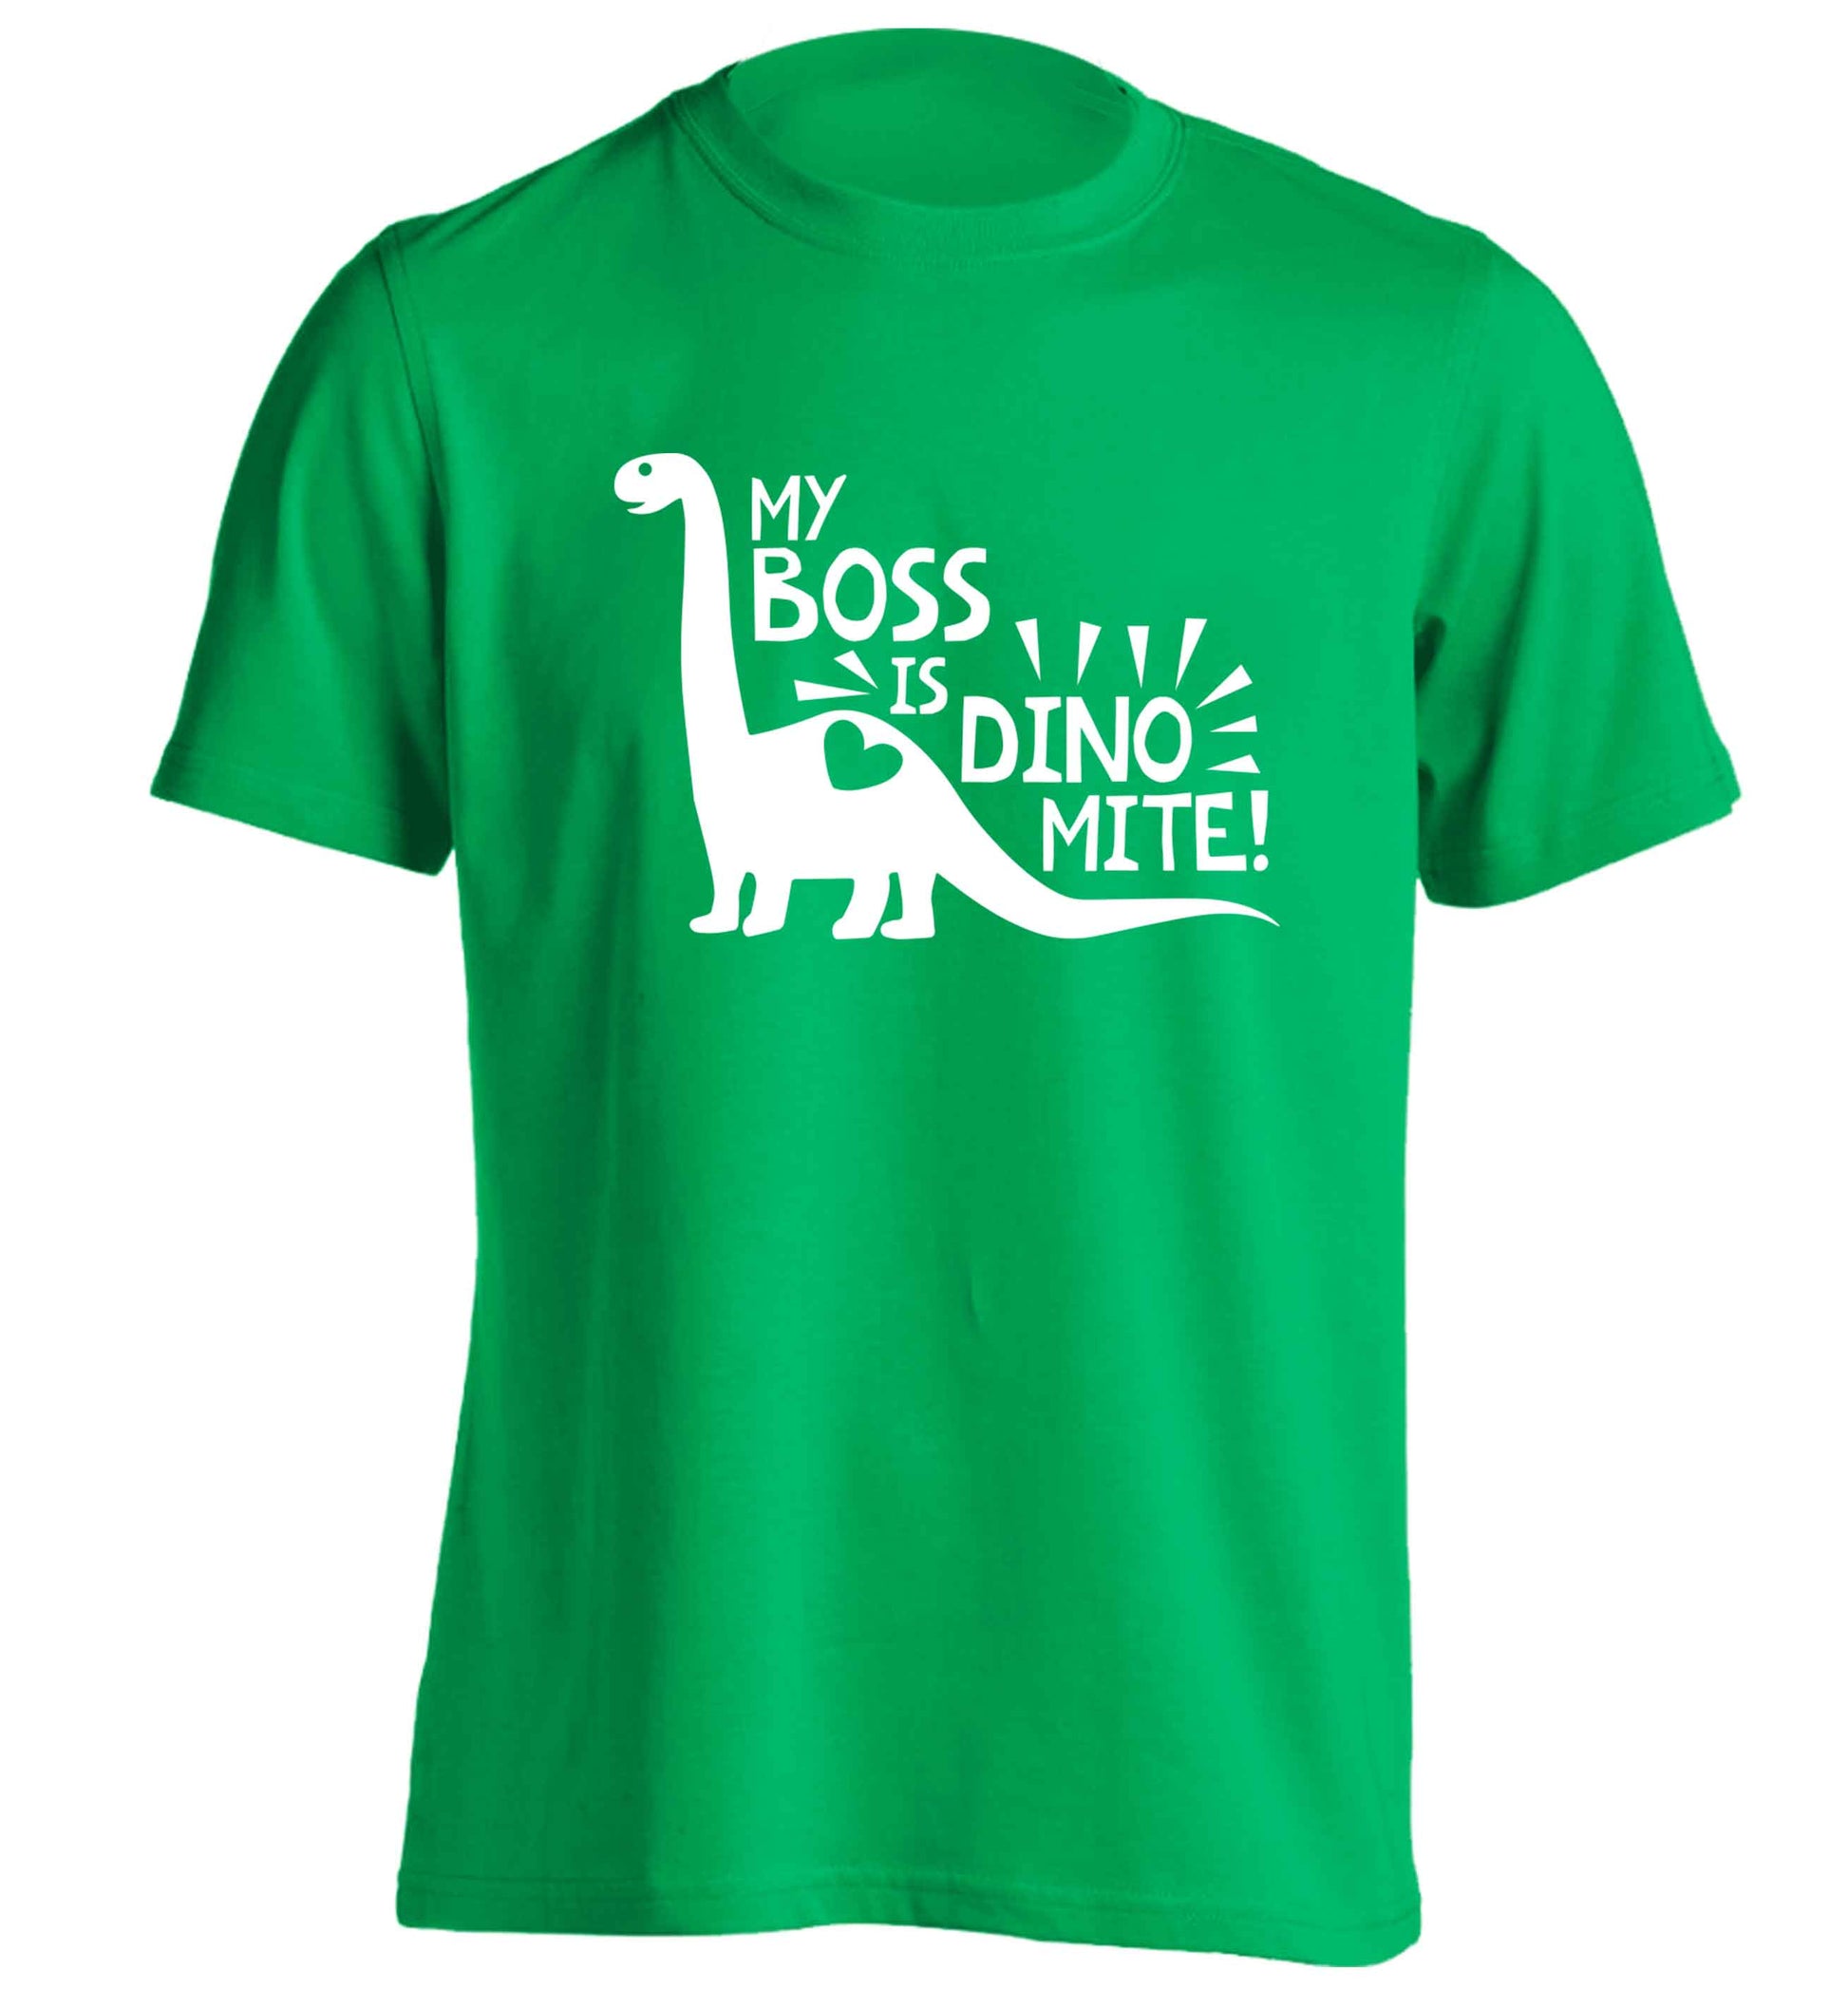 My boss is dinomite! adults unisex green Tshirt 2XL